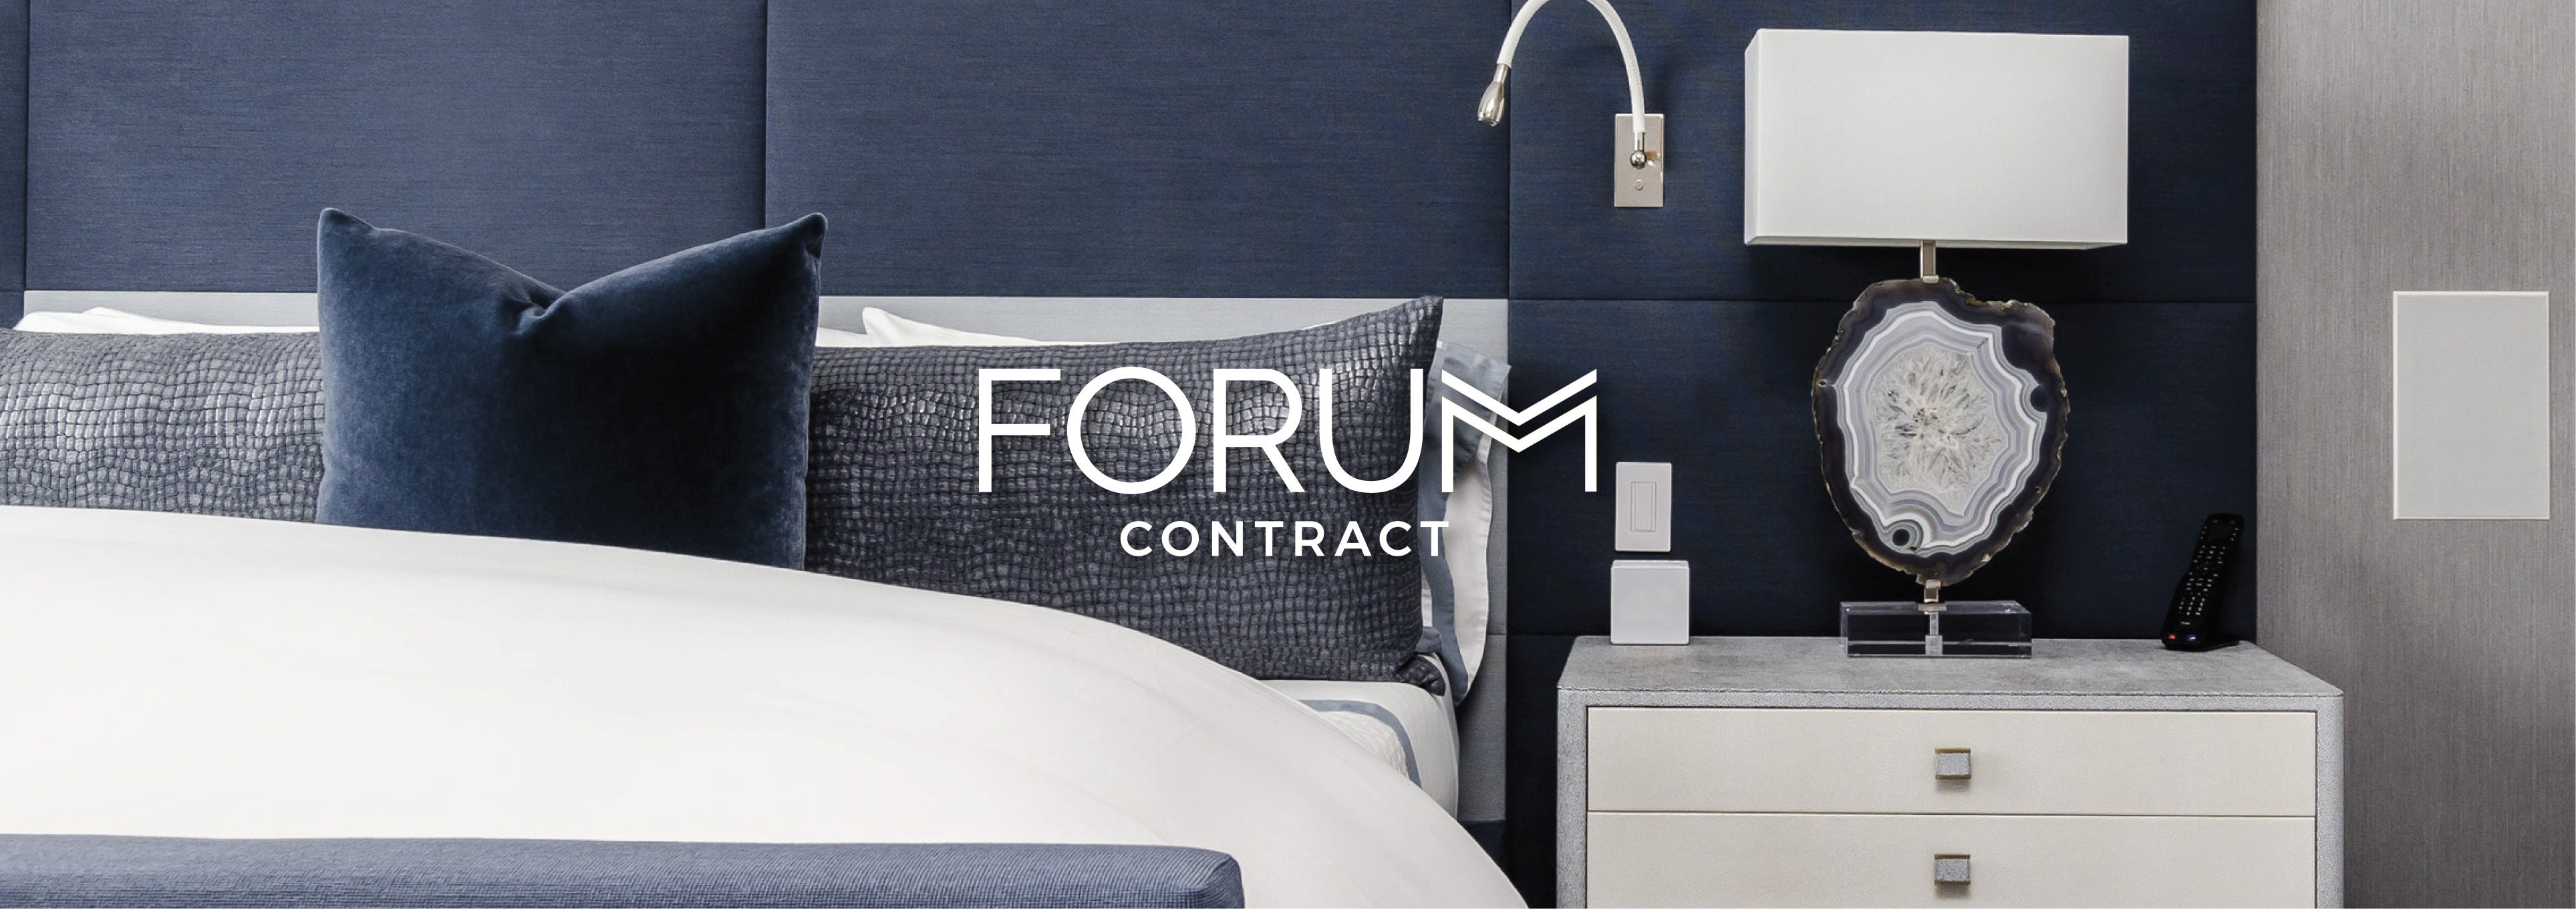 forum contract